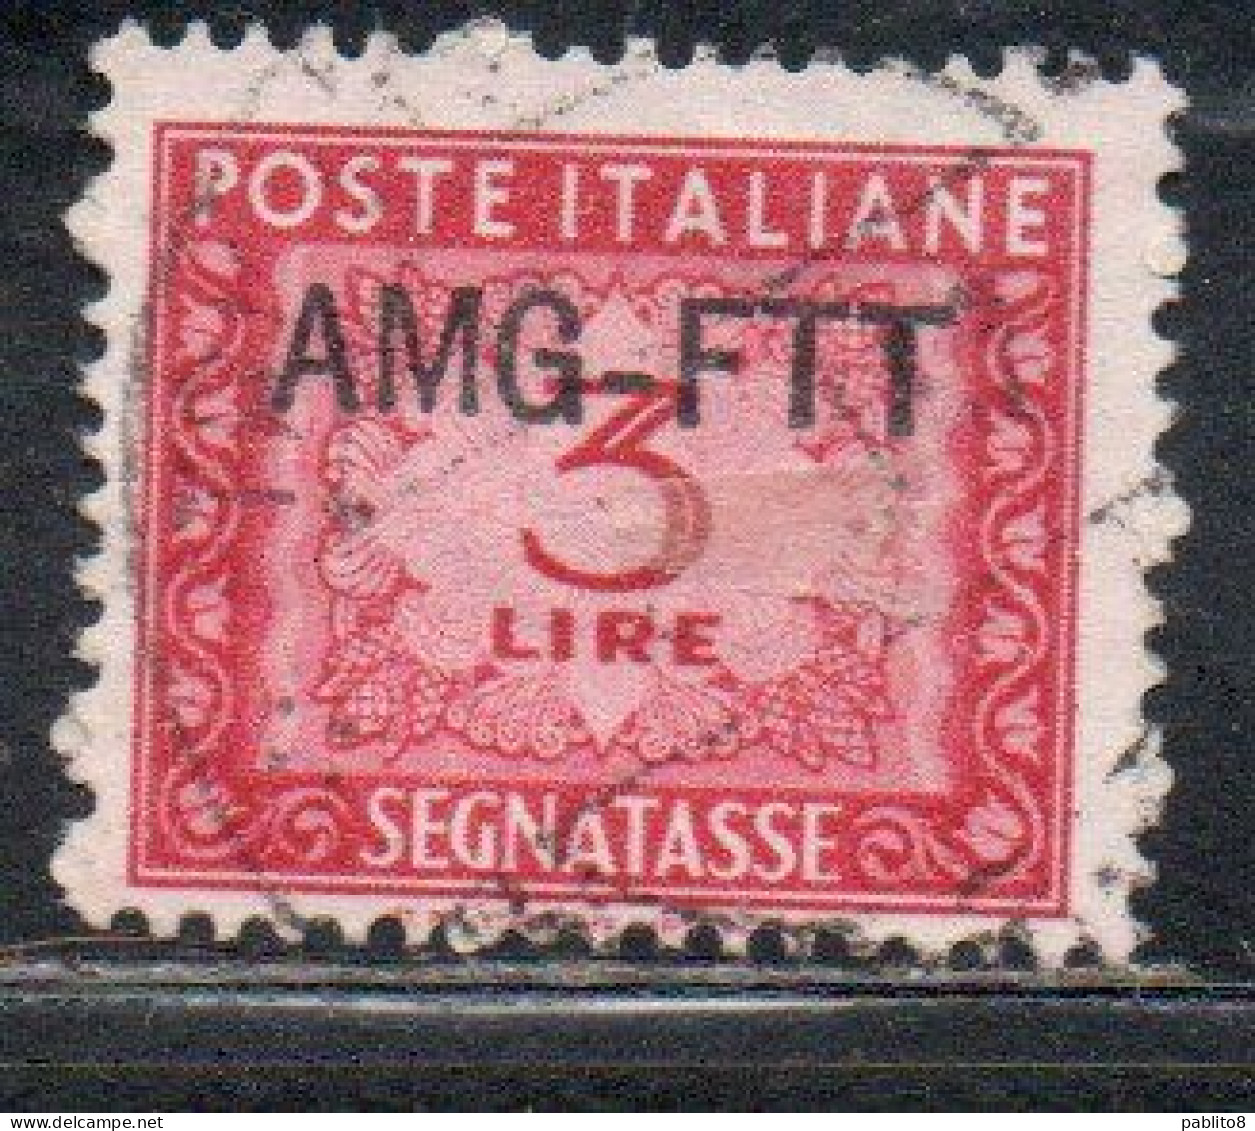 TRIESTE A 1949 1954AMG-FTT SOPRASTAMPATO D'ITALIA ITALY OVERPRINTED SEGNATASSE POSTAGE DUE TAXES TASSE LIRE 3 USATO USED - Strafport